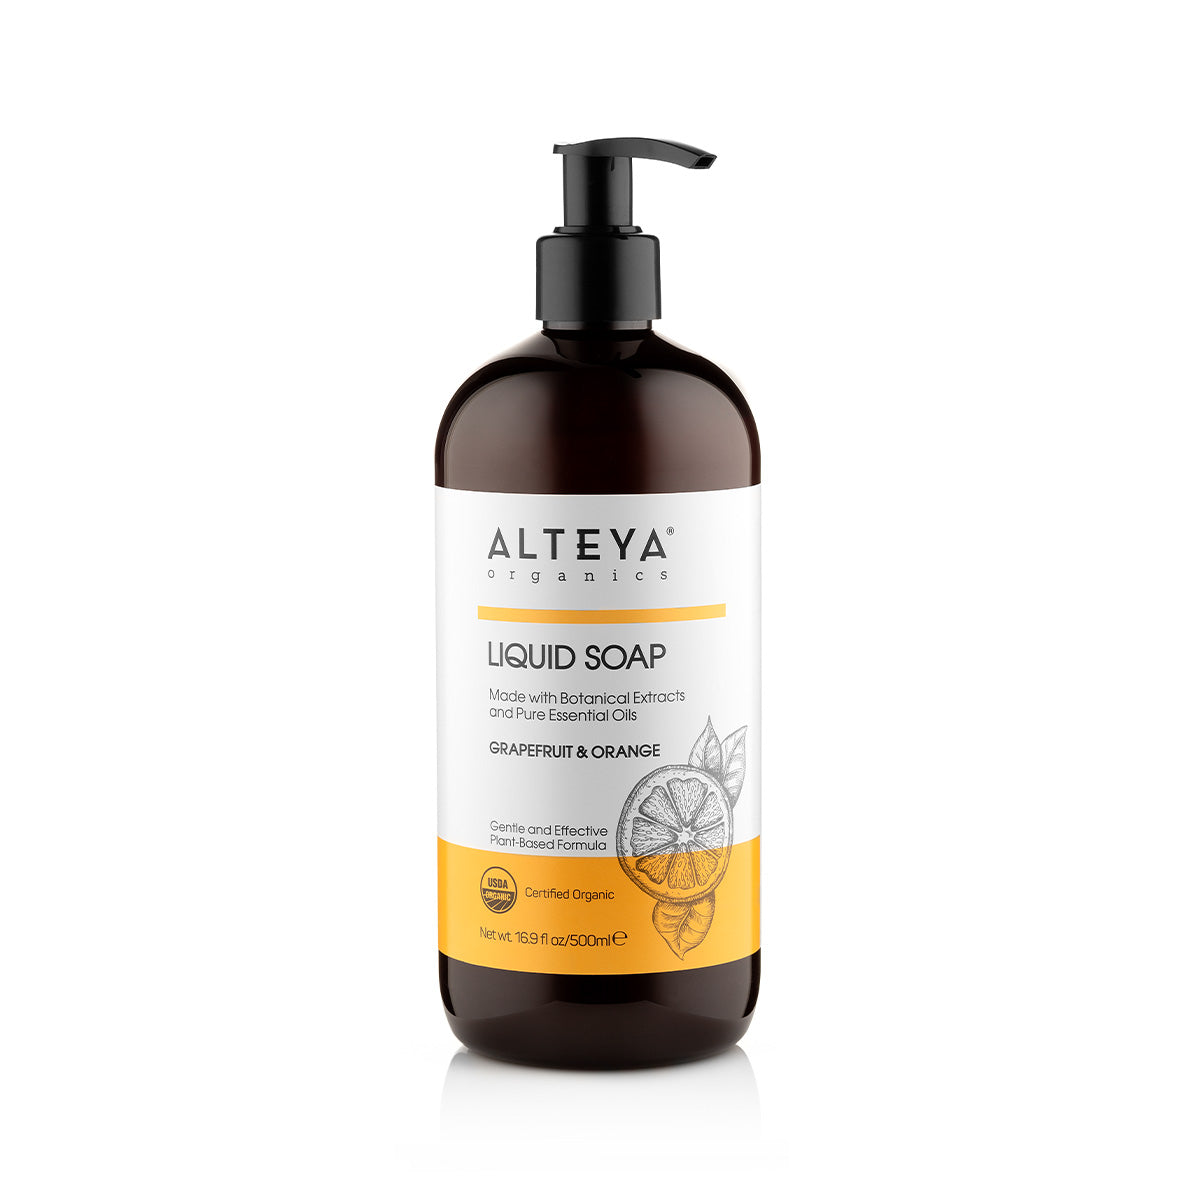 An organic bottle of Alteya Organics Liquid Soap Grapefruit & Orange on a white background.